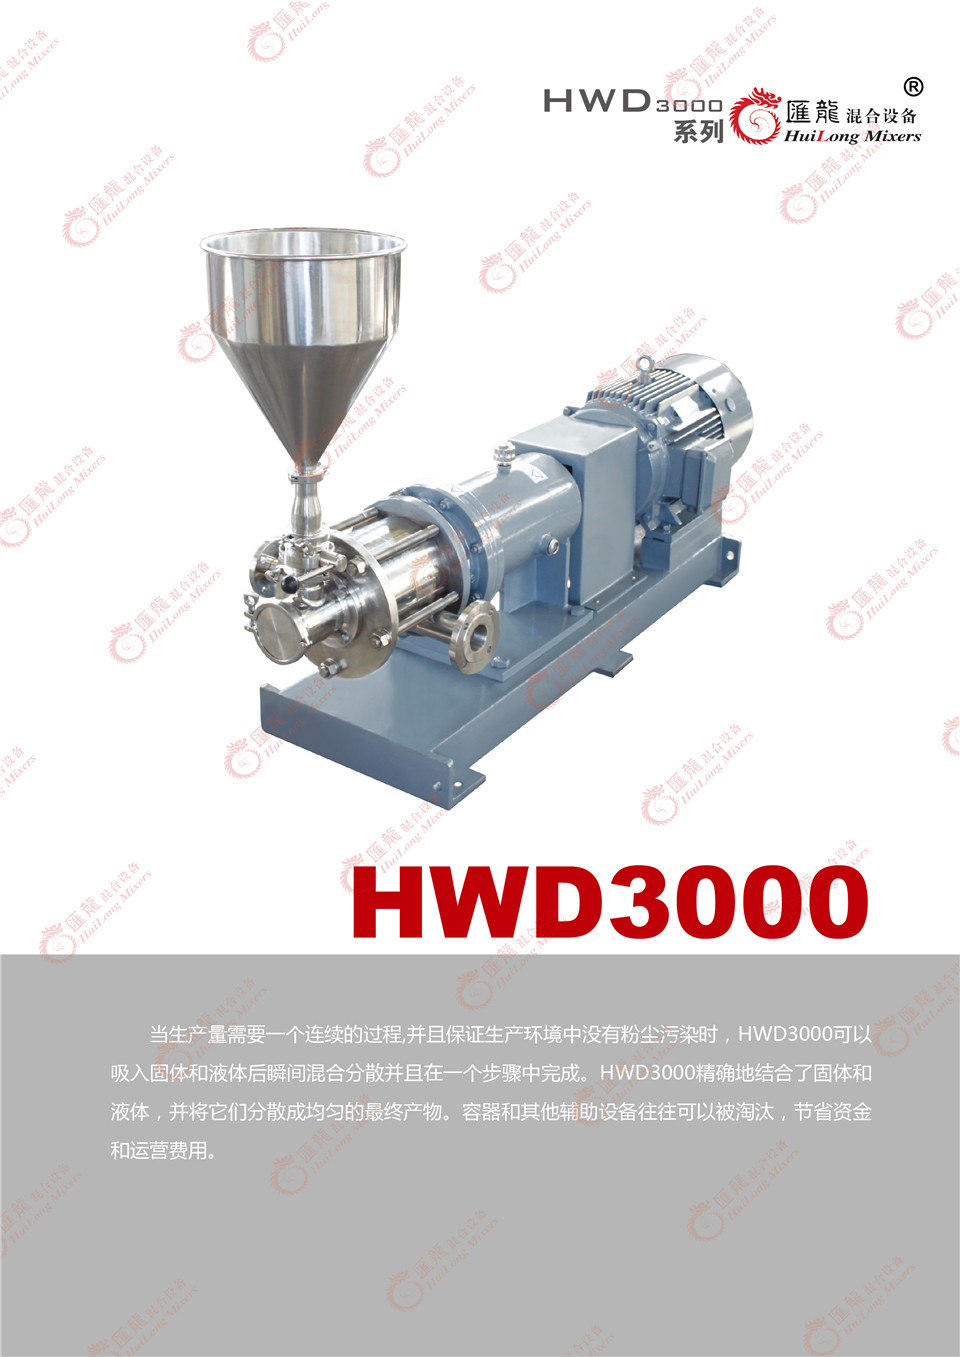 “HWD3000系统乳化机”